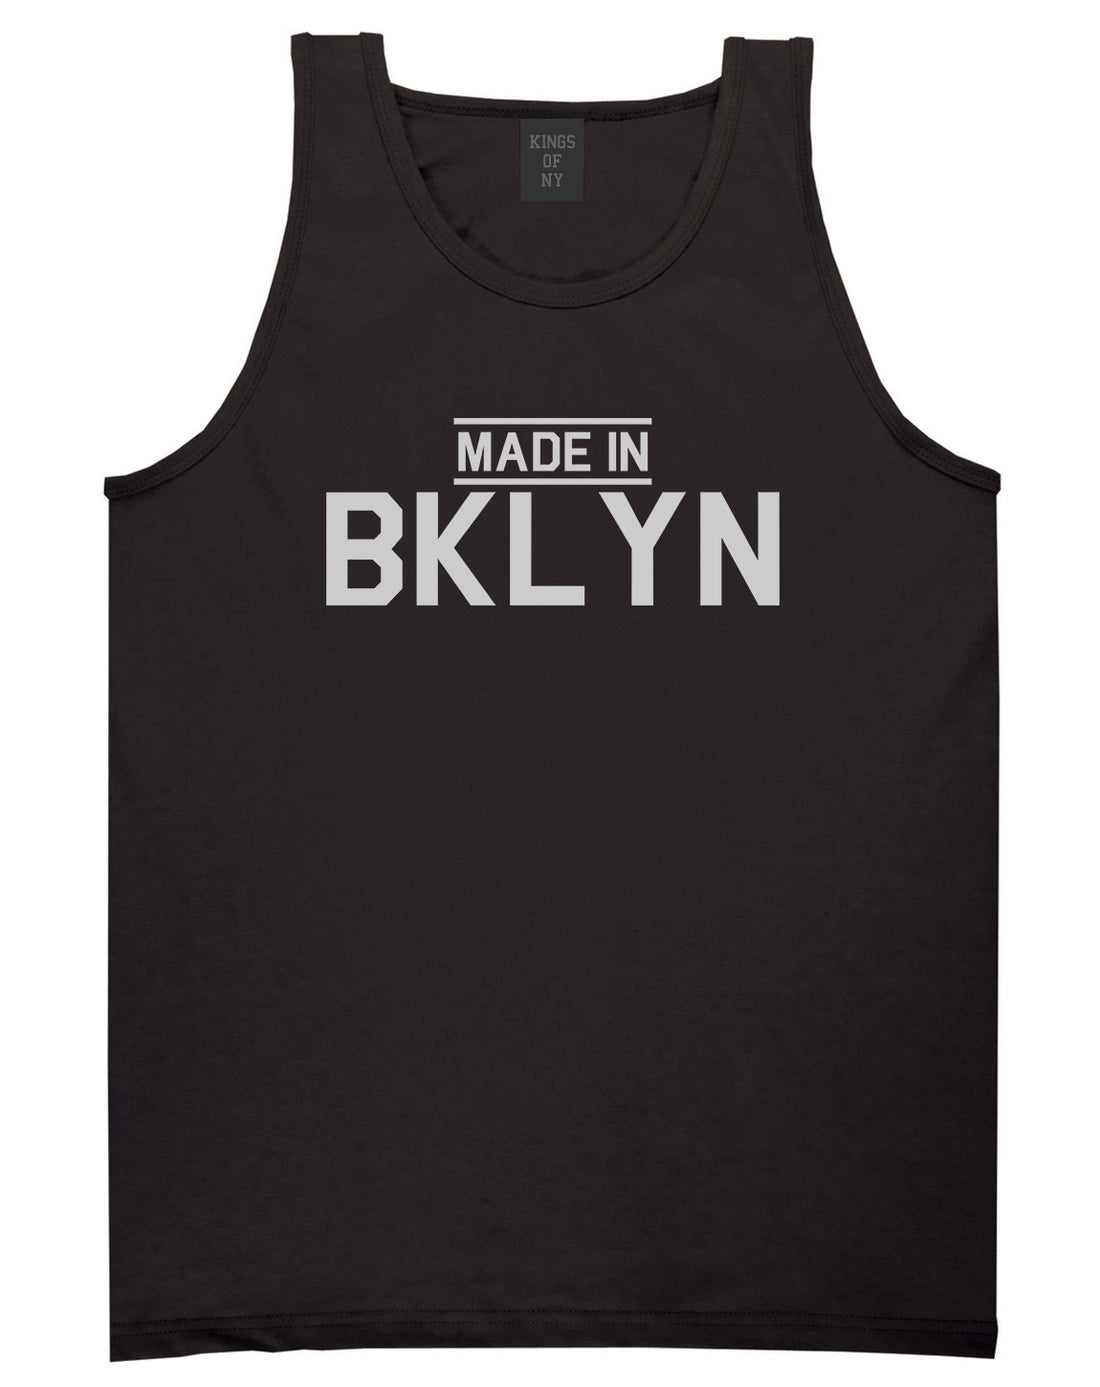 Made In BKLYN Brooklyn Mens Tank Top T-Shirt Black